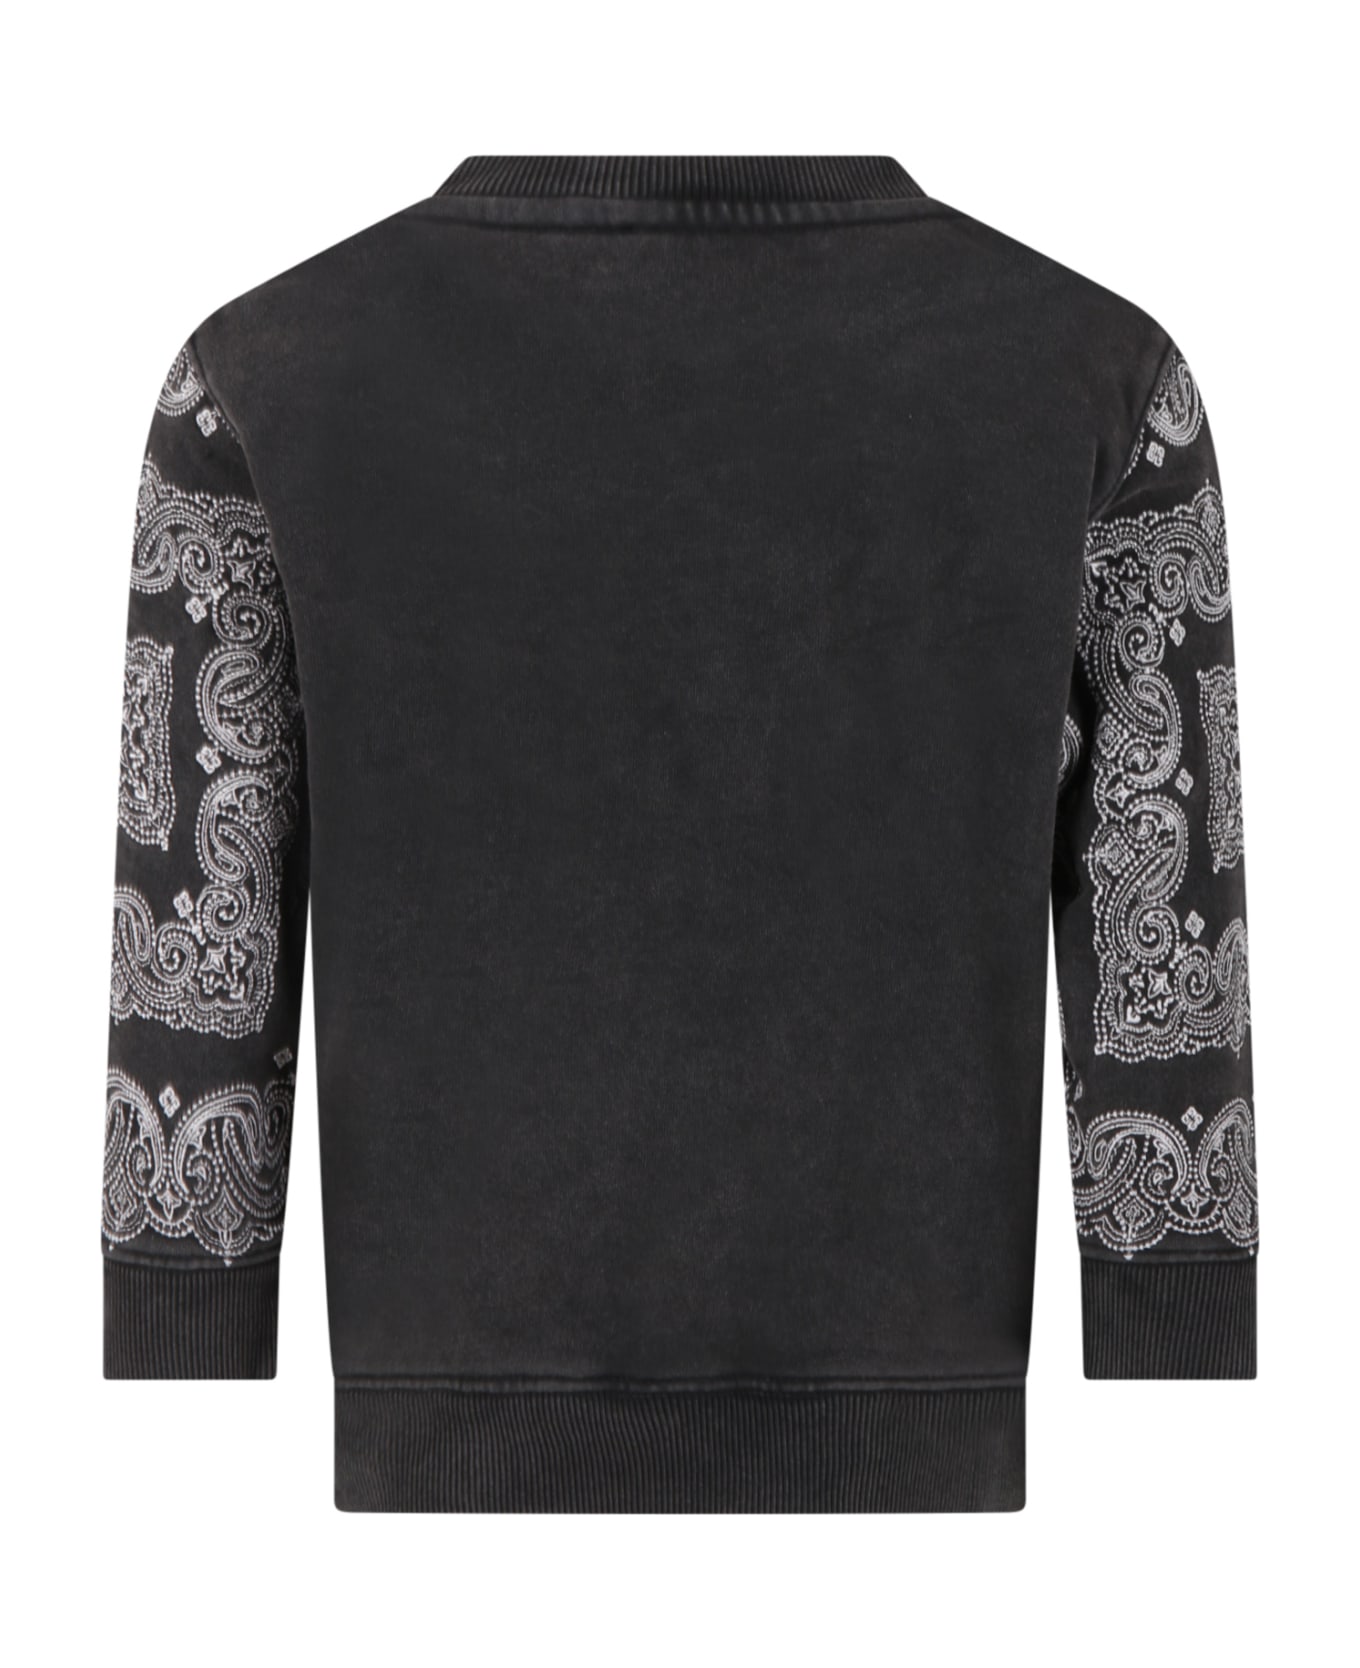 Givenchy Black Sweatshirt For Boy With Logo - Black